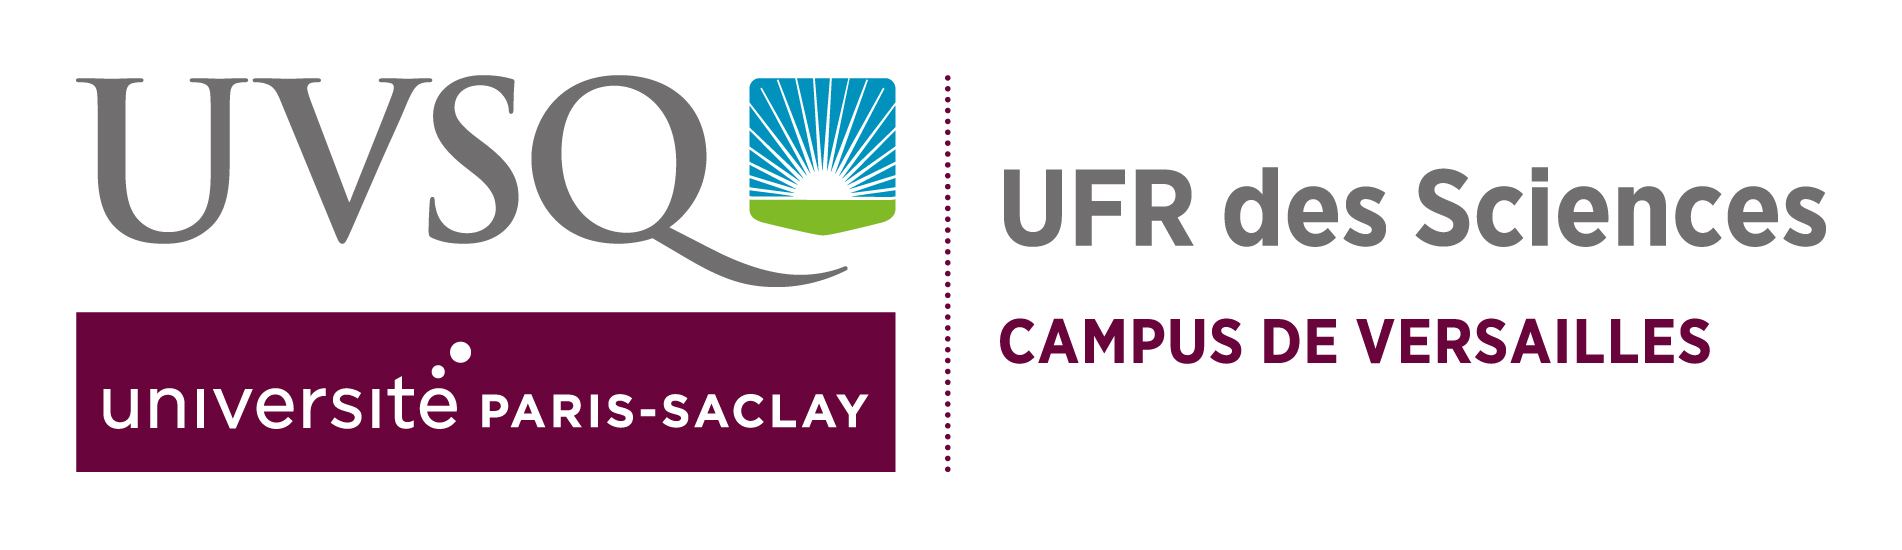 logo-UFR des sciences